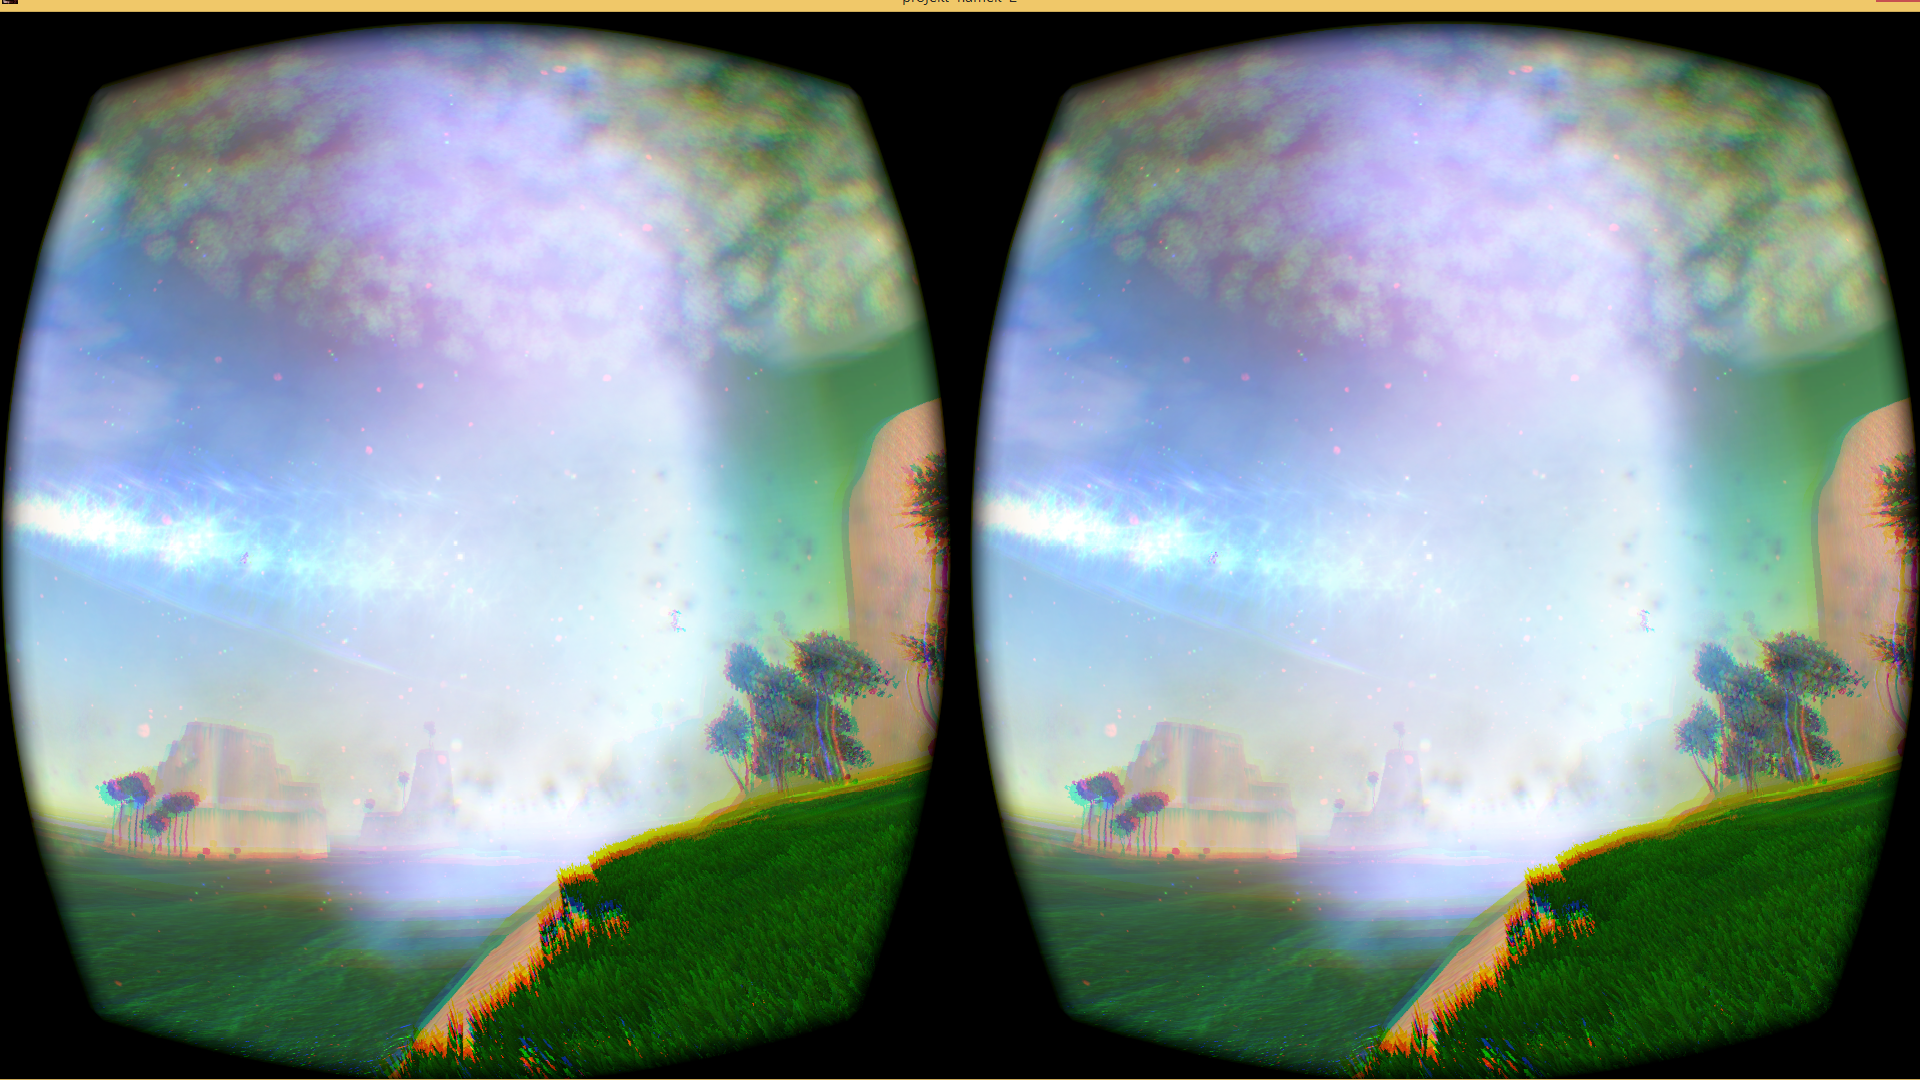 The Kamehameha looked pretty sweet in VR. 